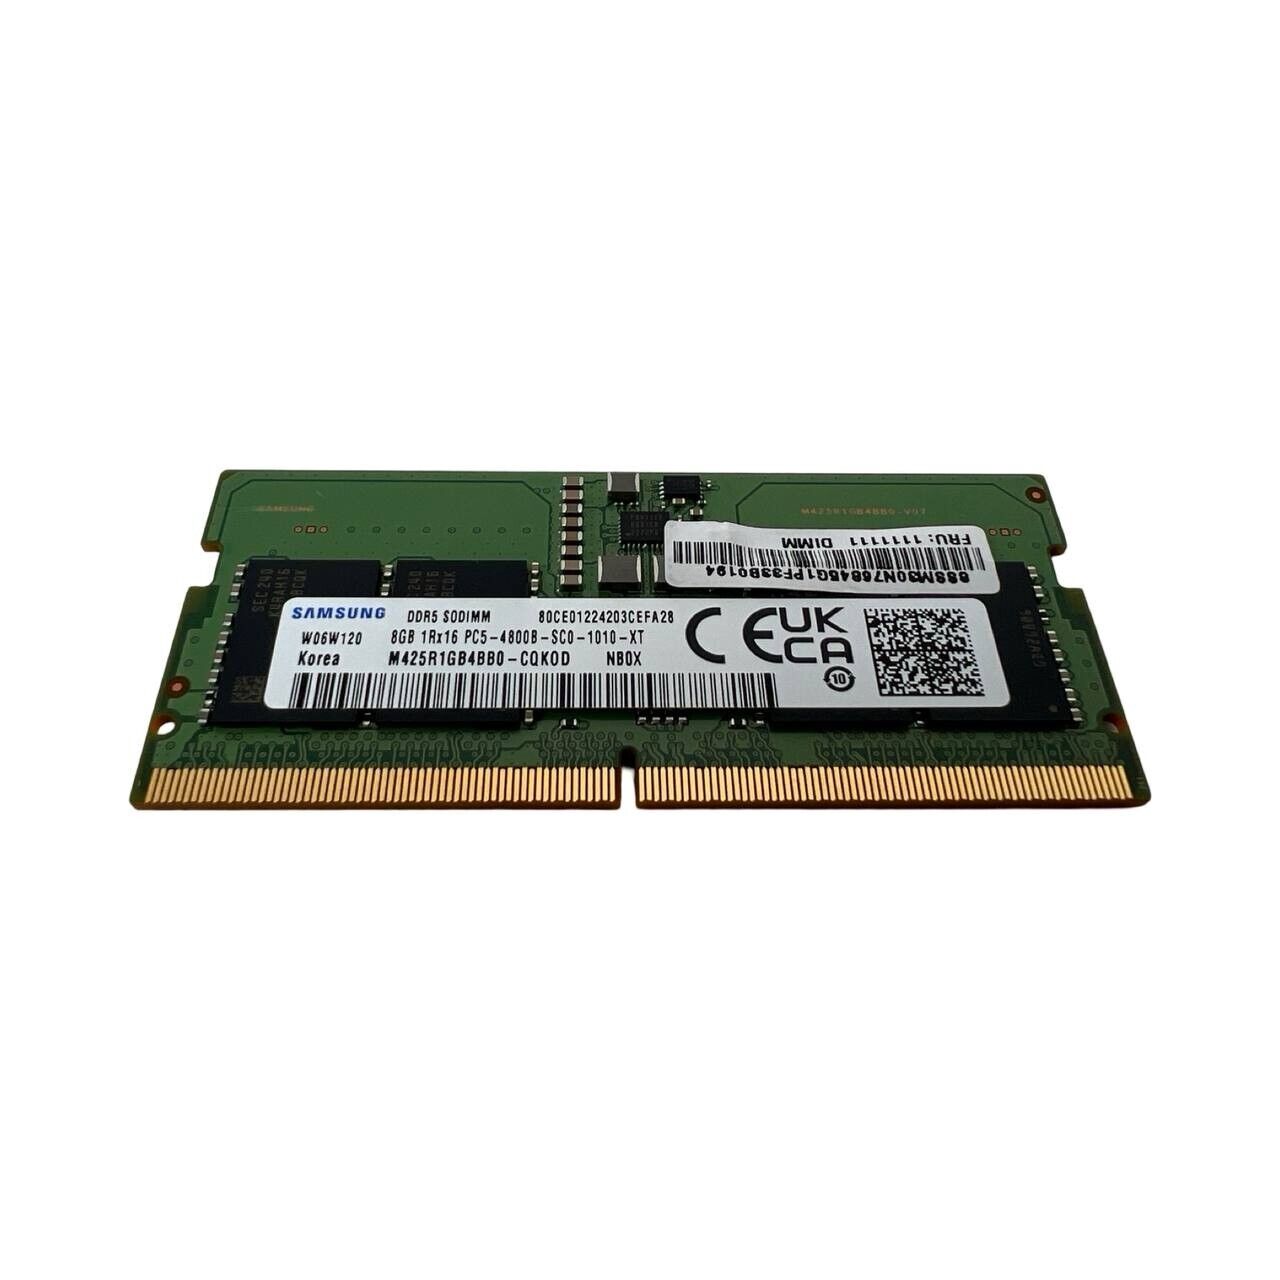 SAMSUNG 8GB DDR5 4800MHz Laptop RAM SODIMM 1Rx16 PC5-4800B M425R1GB4BB0-CQK0D